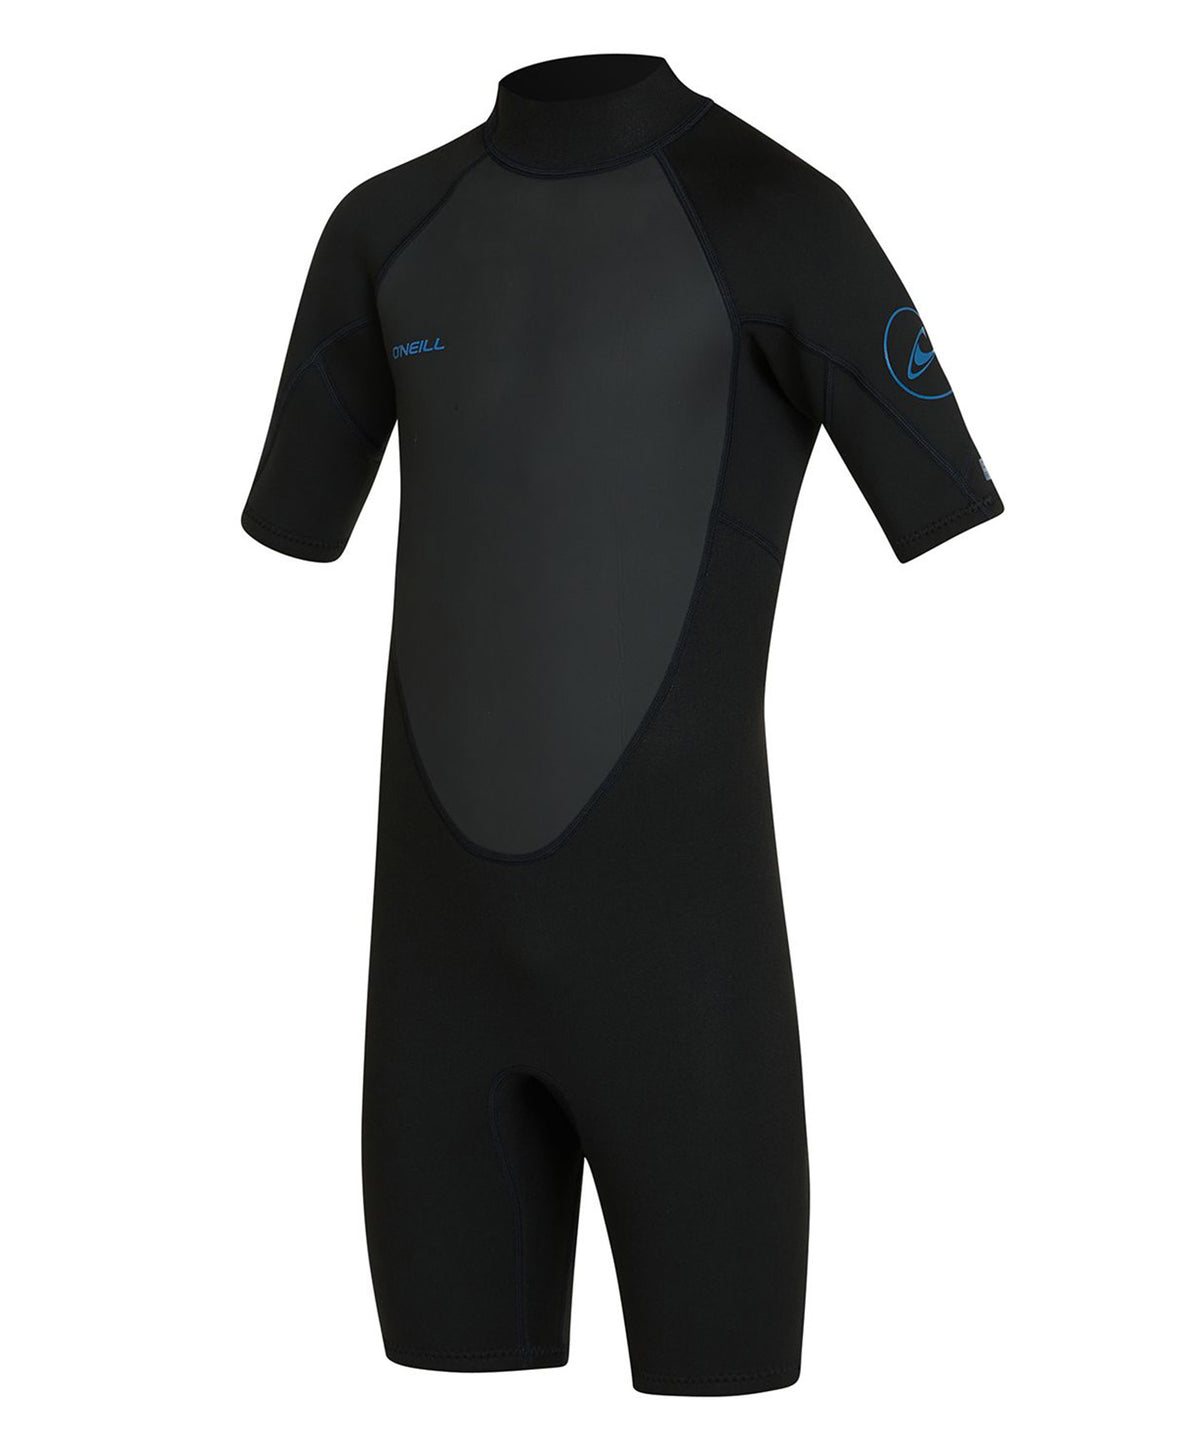 Boy's Reactor Short Sleeve Spring Suit 2mm Wetsuit - Black